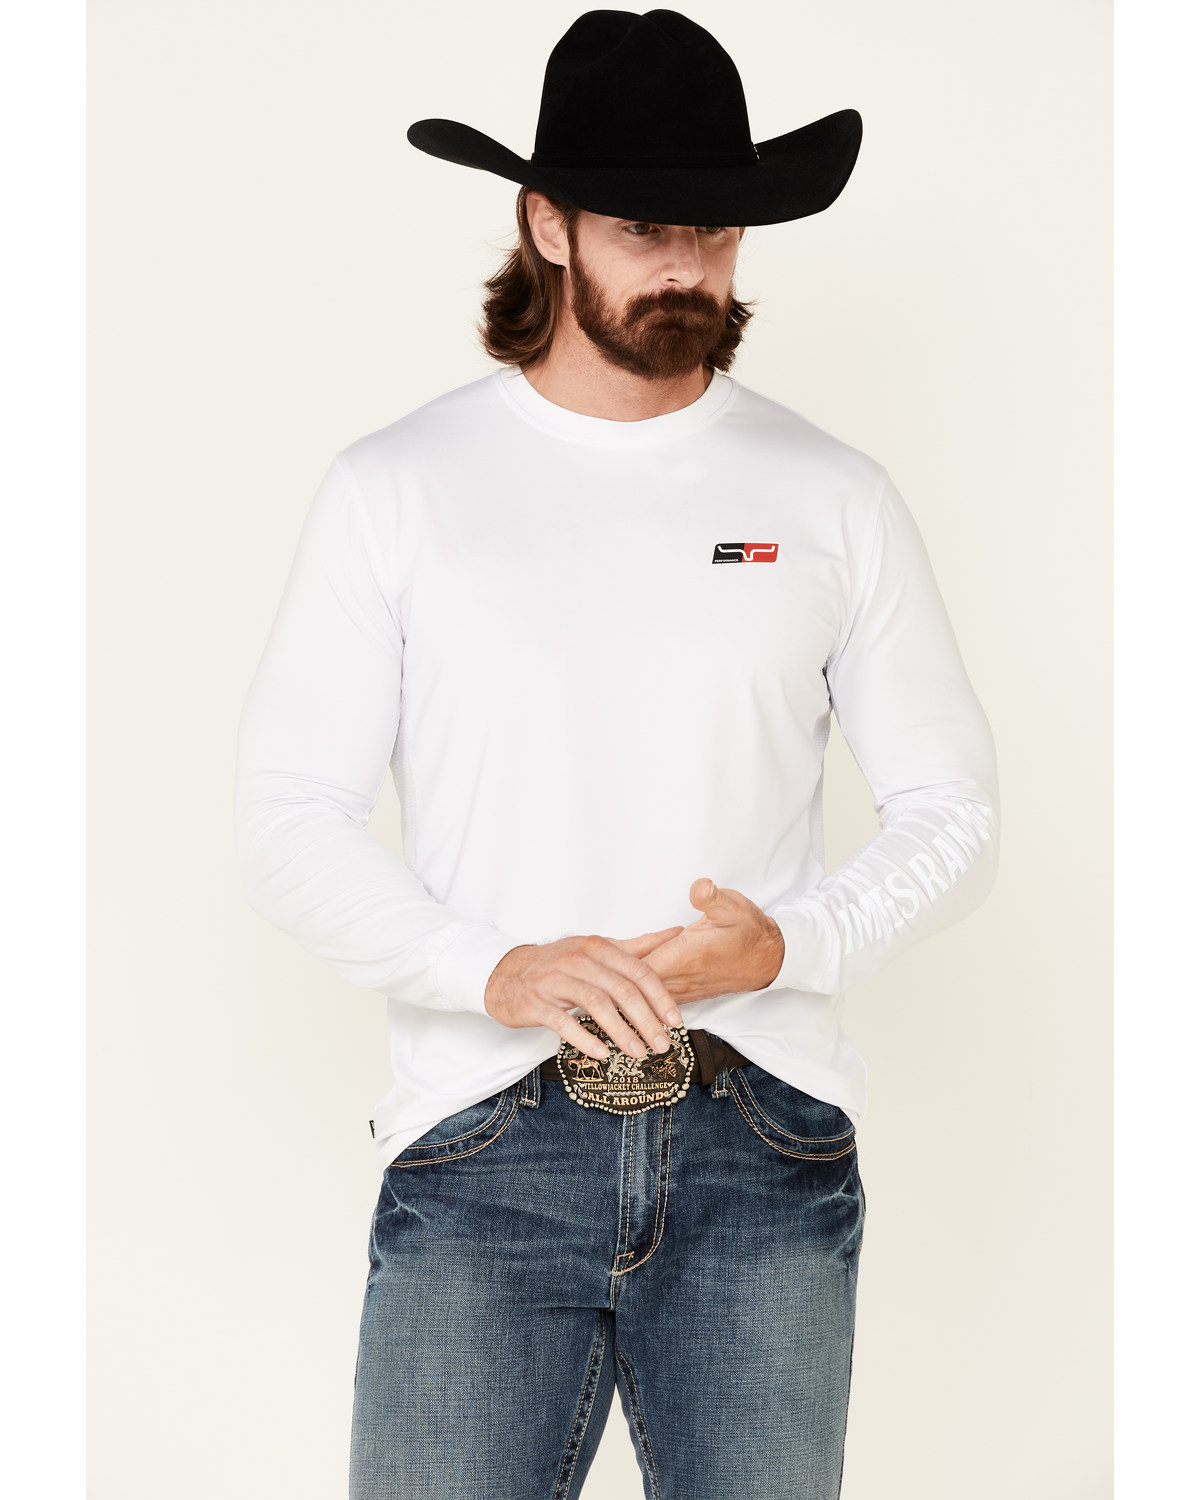 Kimes Ranch Men's White KR2 Performance Logo Long Sleeve T-Shirt